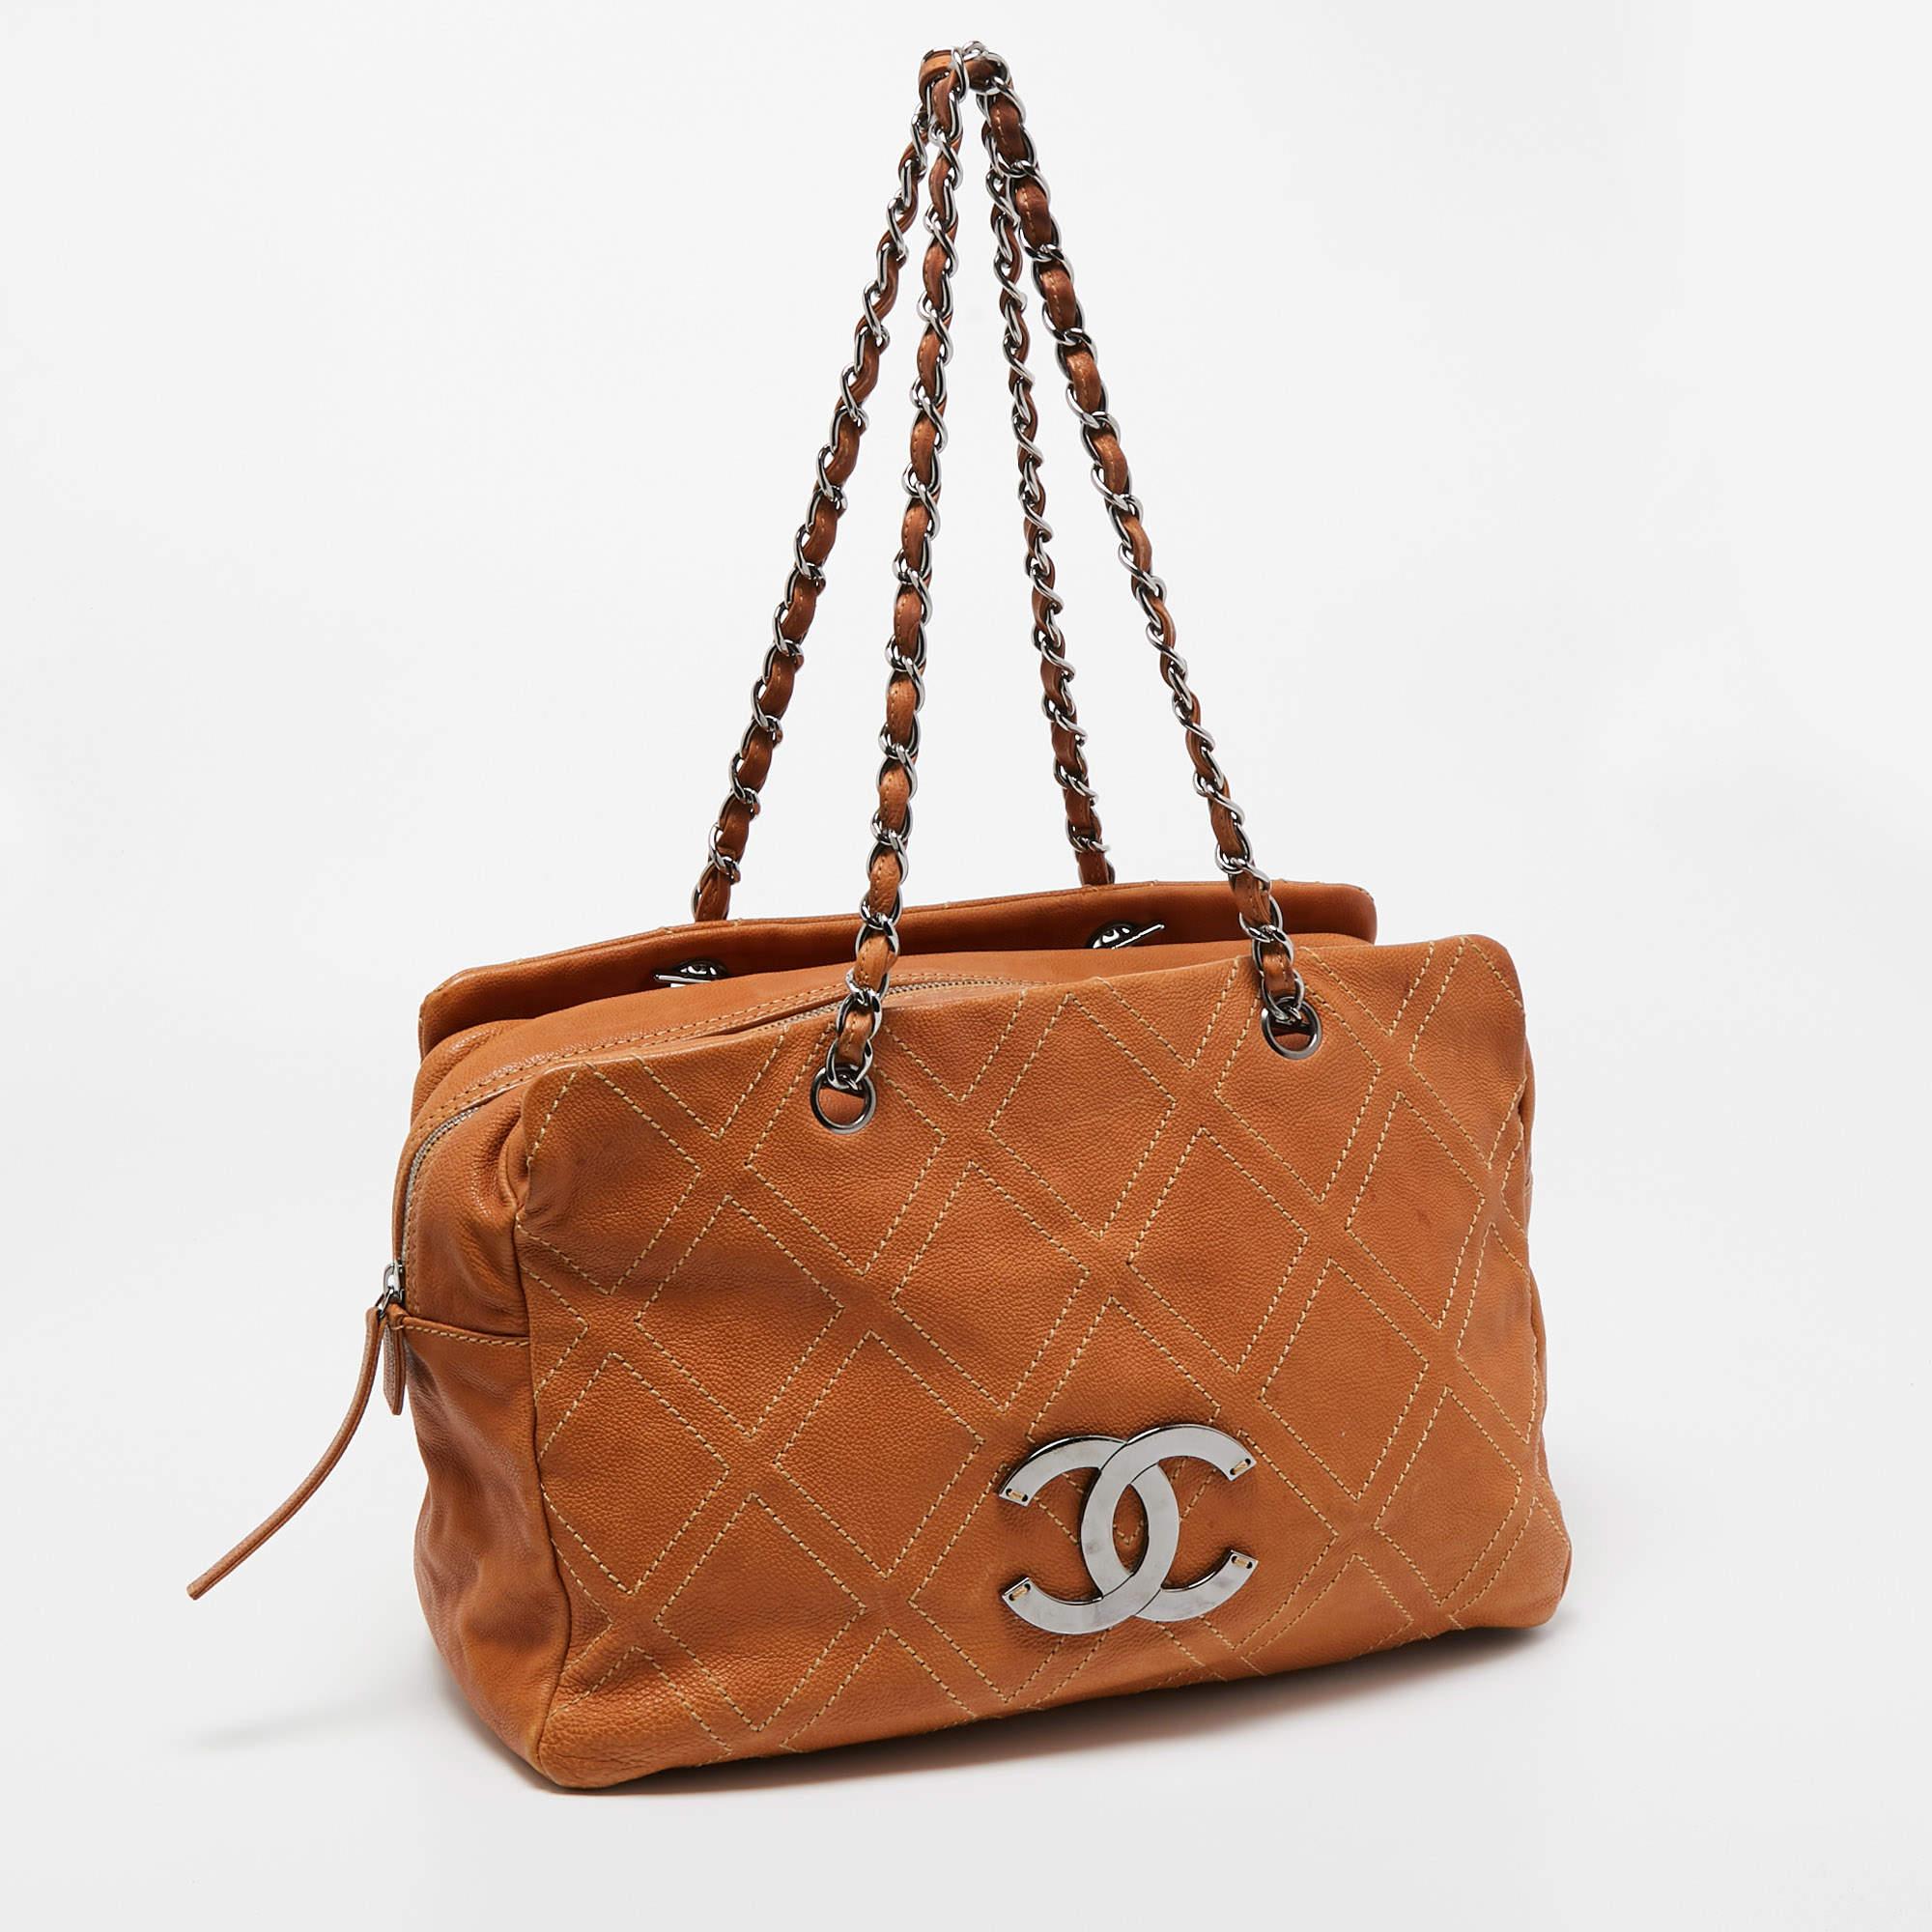 Women's Chanel Tan Leather Triple Compartment Chain Shoulder Bag